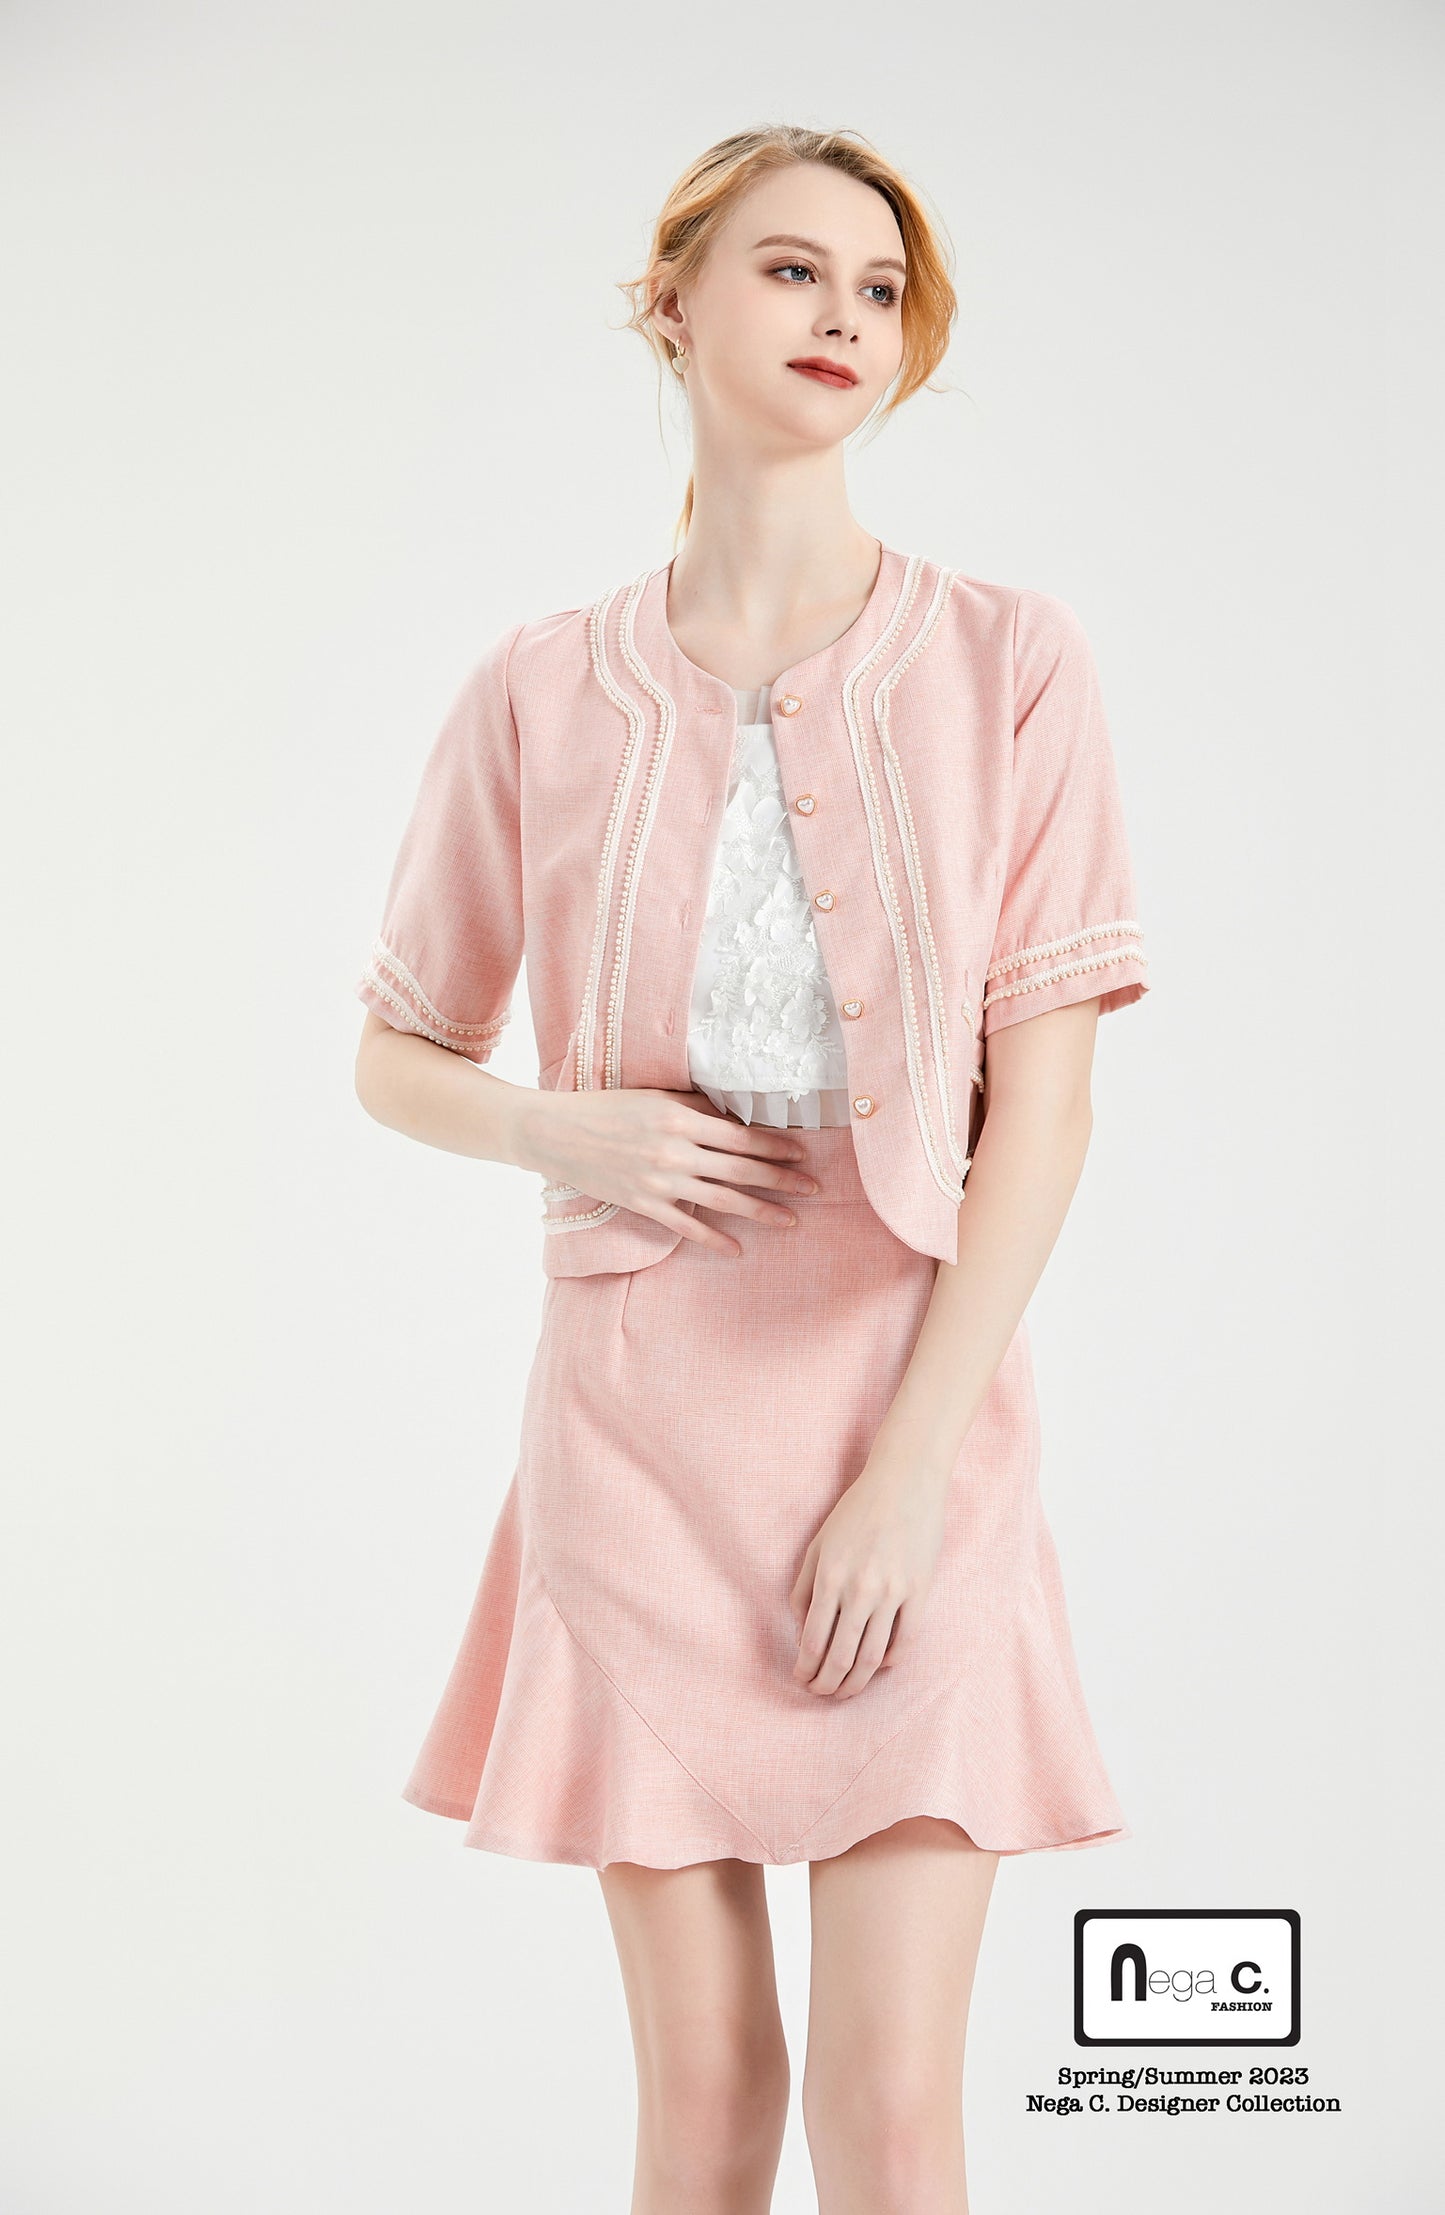 Nega C. Round Neck Pearl Short Sleeve Jacket |Pink |With lining